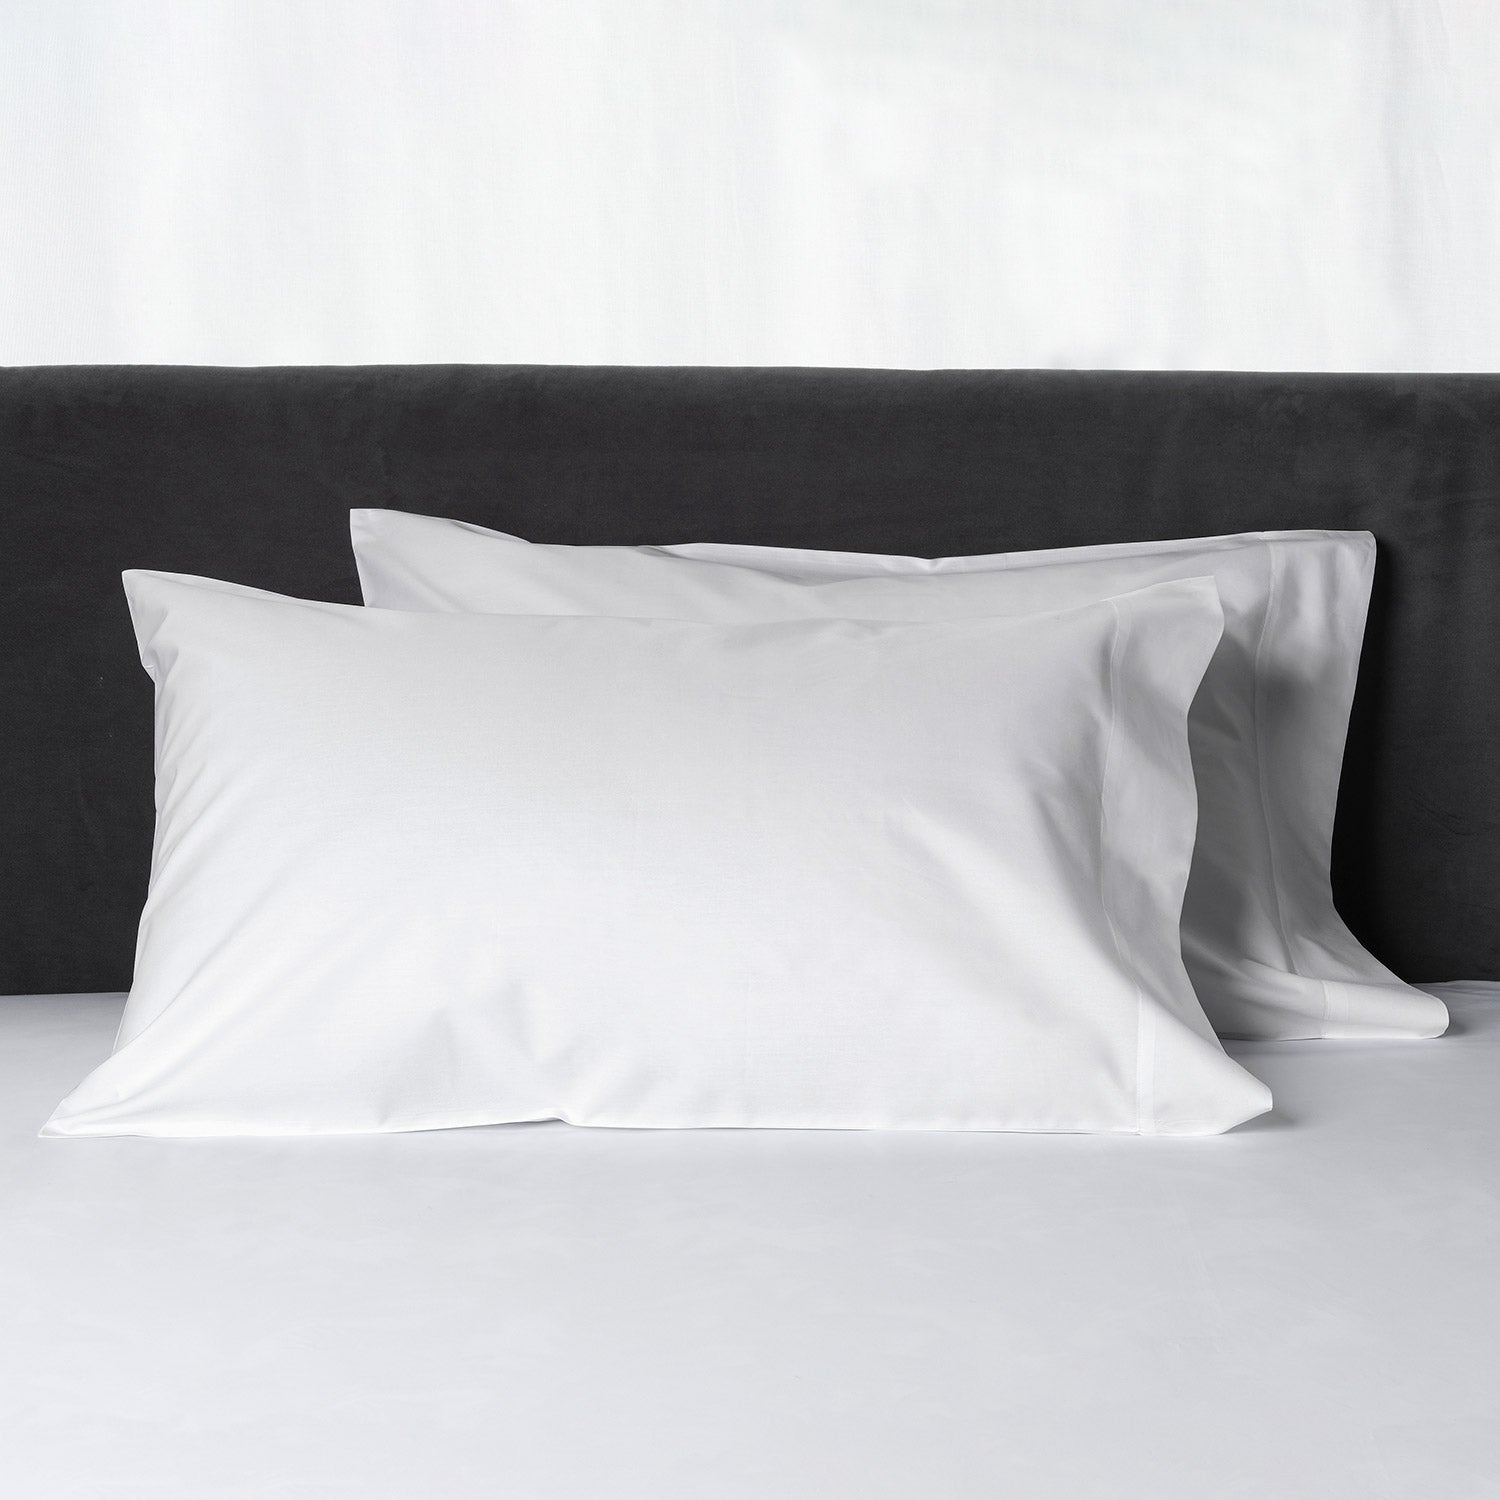 Lineare Percale Sheets & Pillowcases, White Pillowcase Pair / Standard